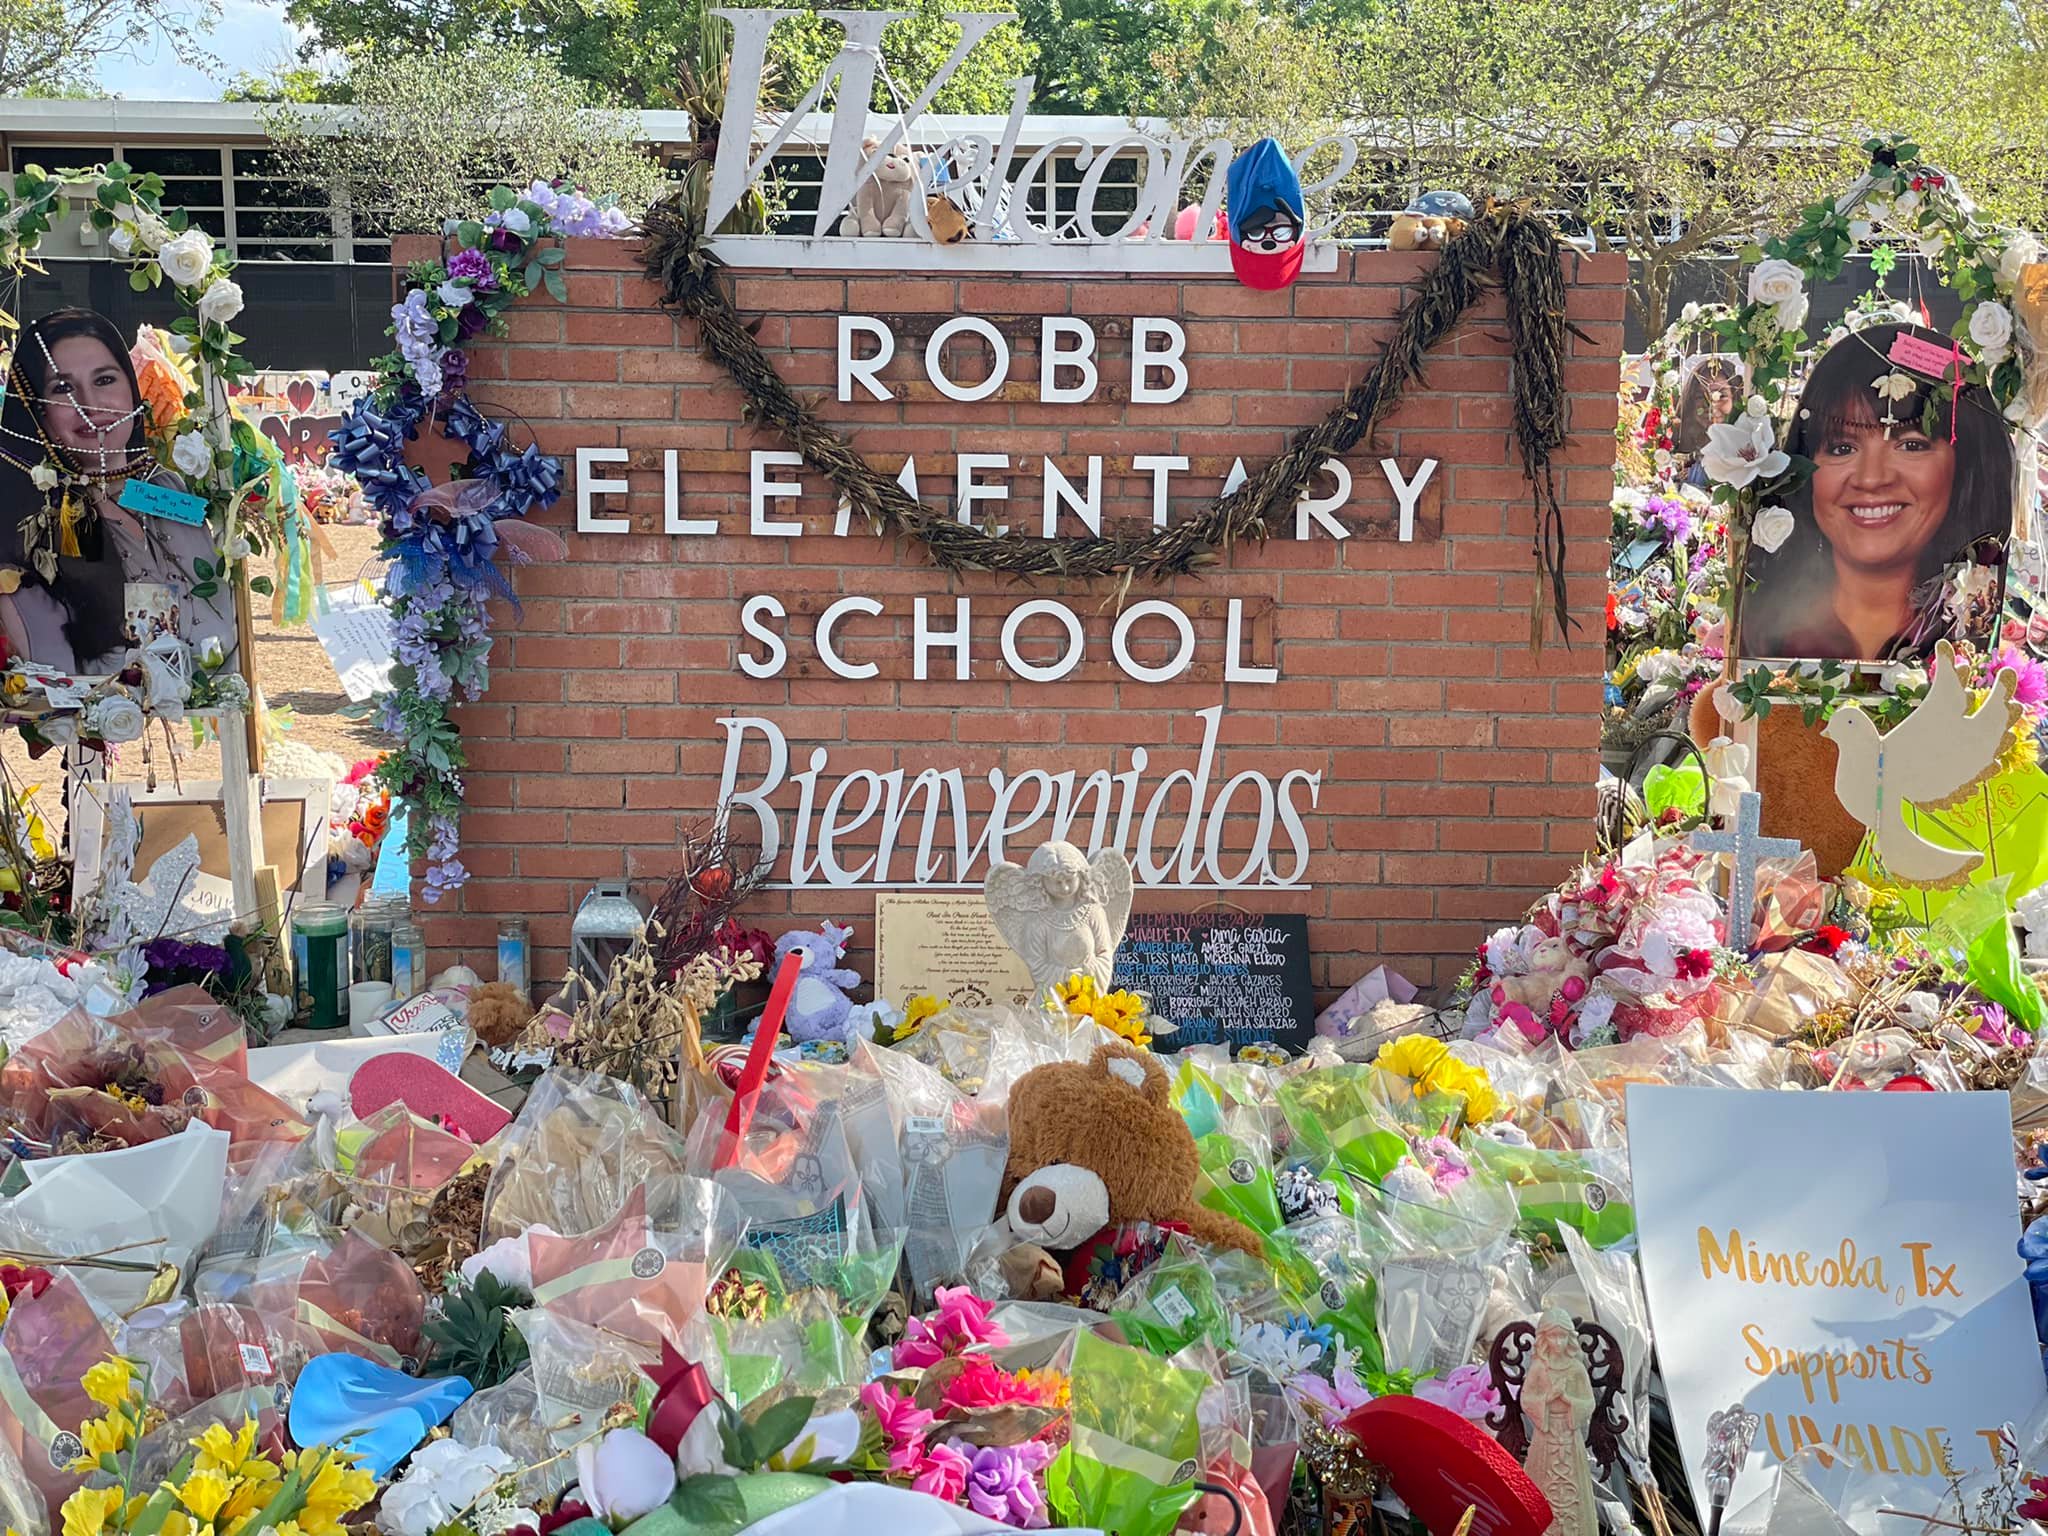 Robb elementary school memorial